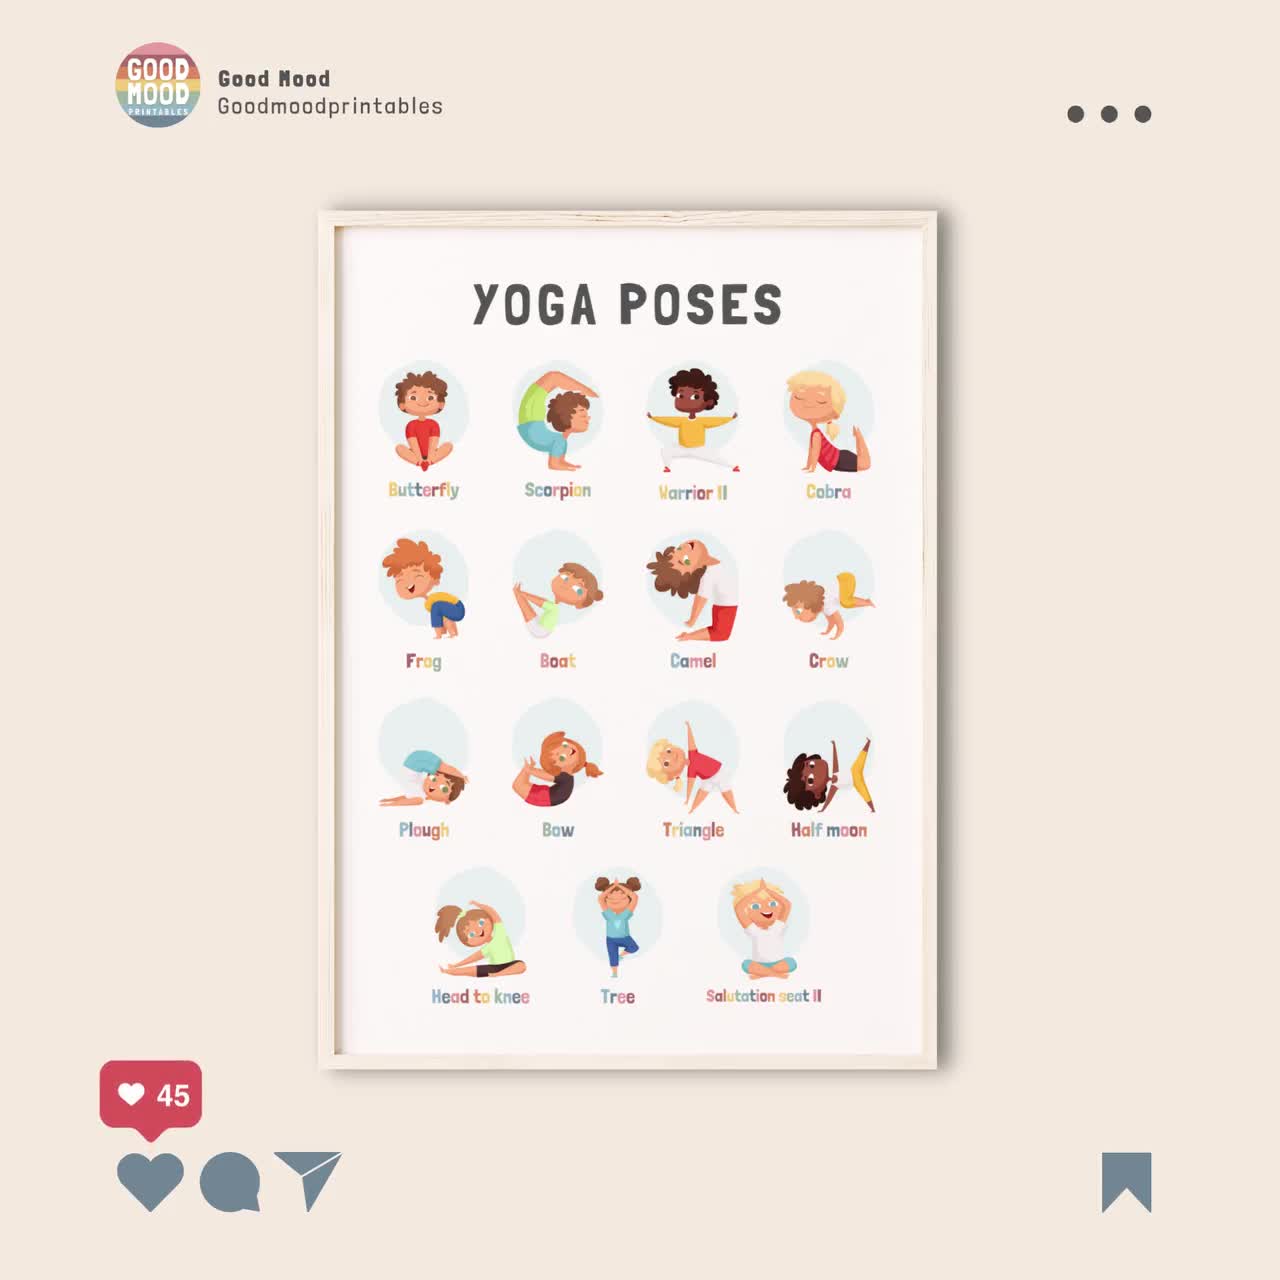 Yoga Pose Cards | Prekindergarten Resource | Twinkl USA